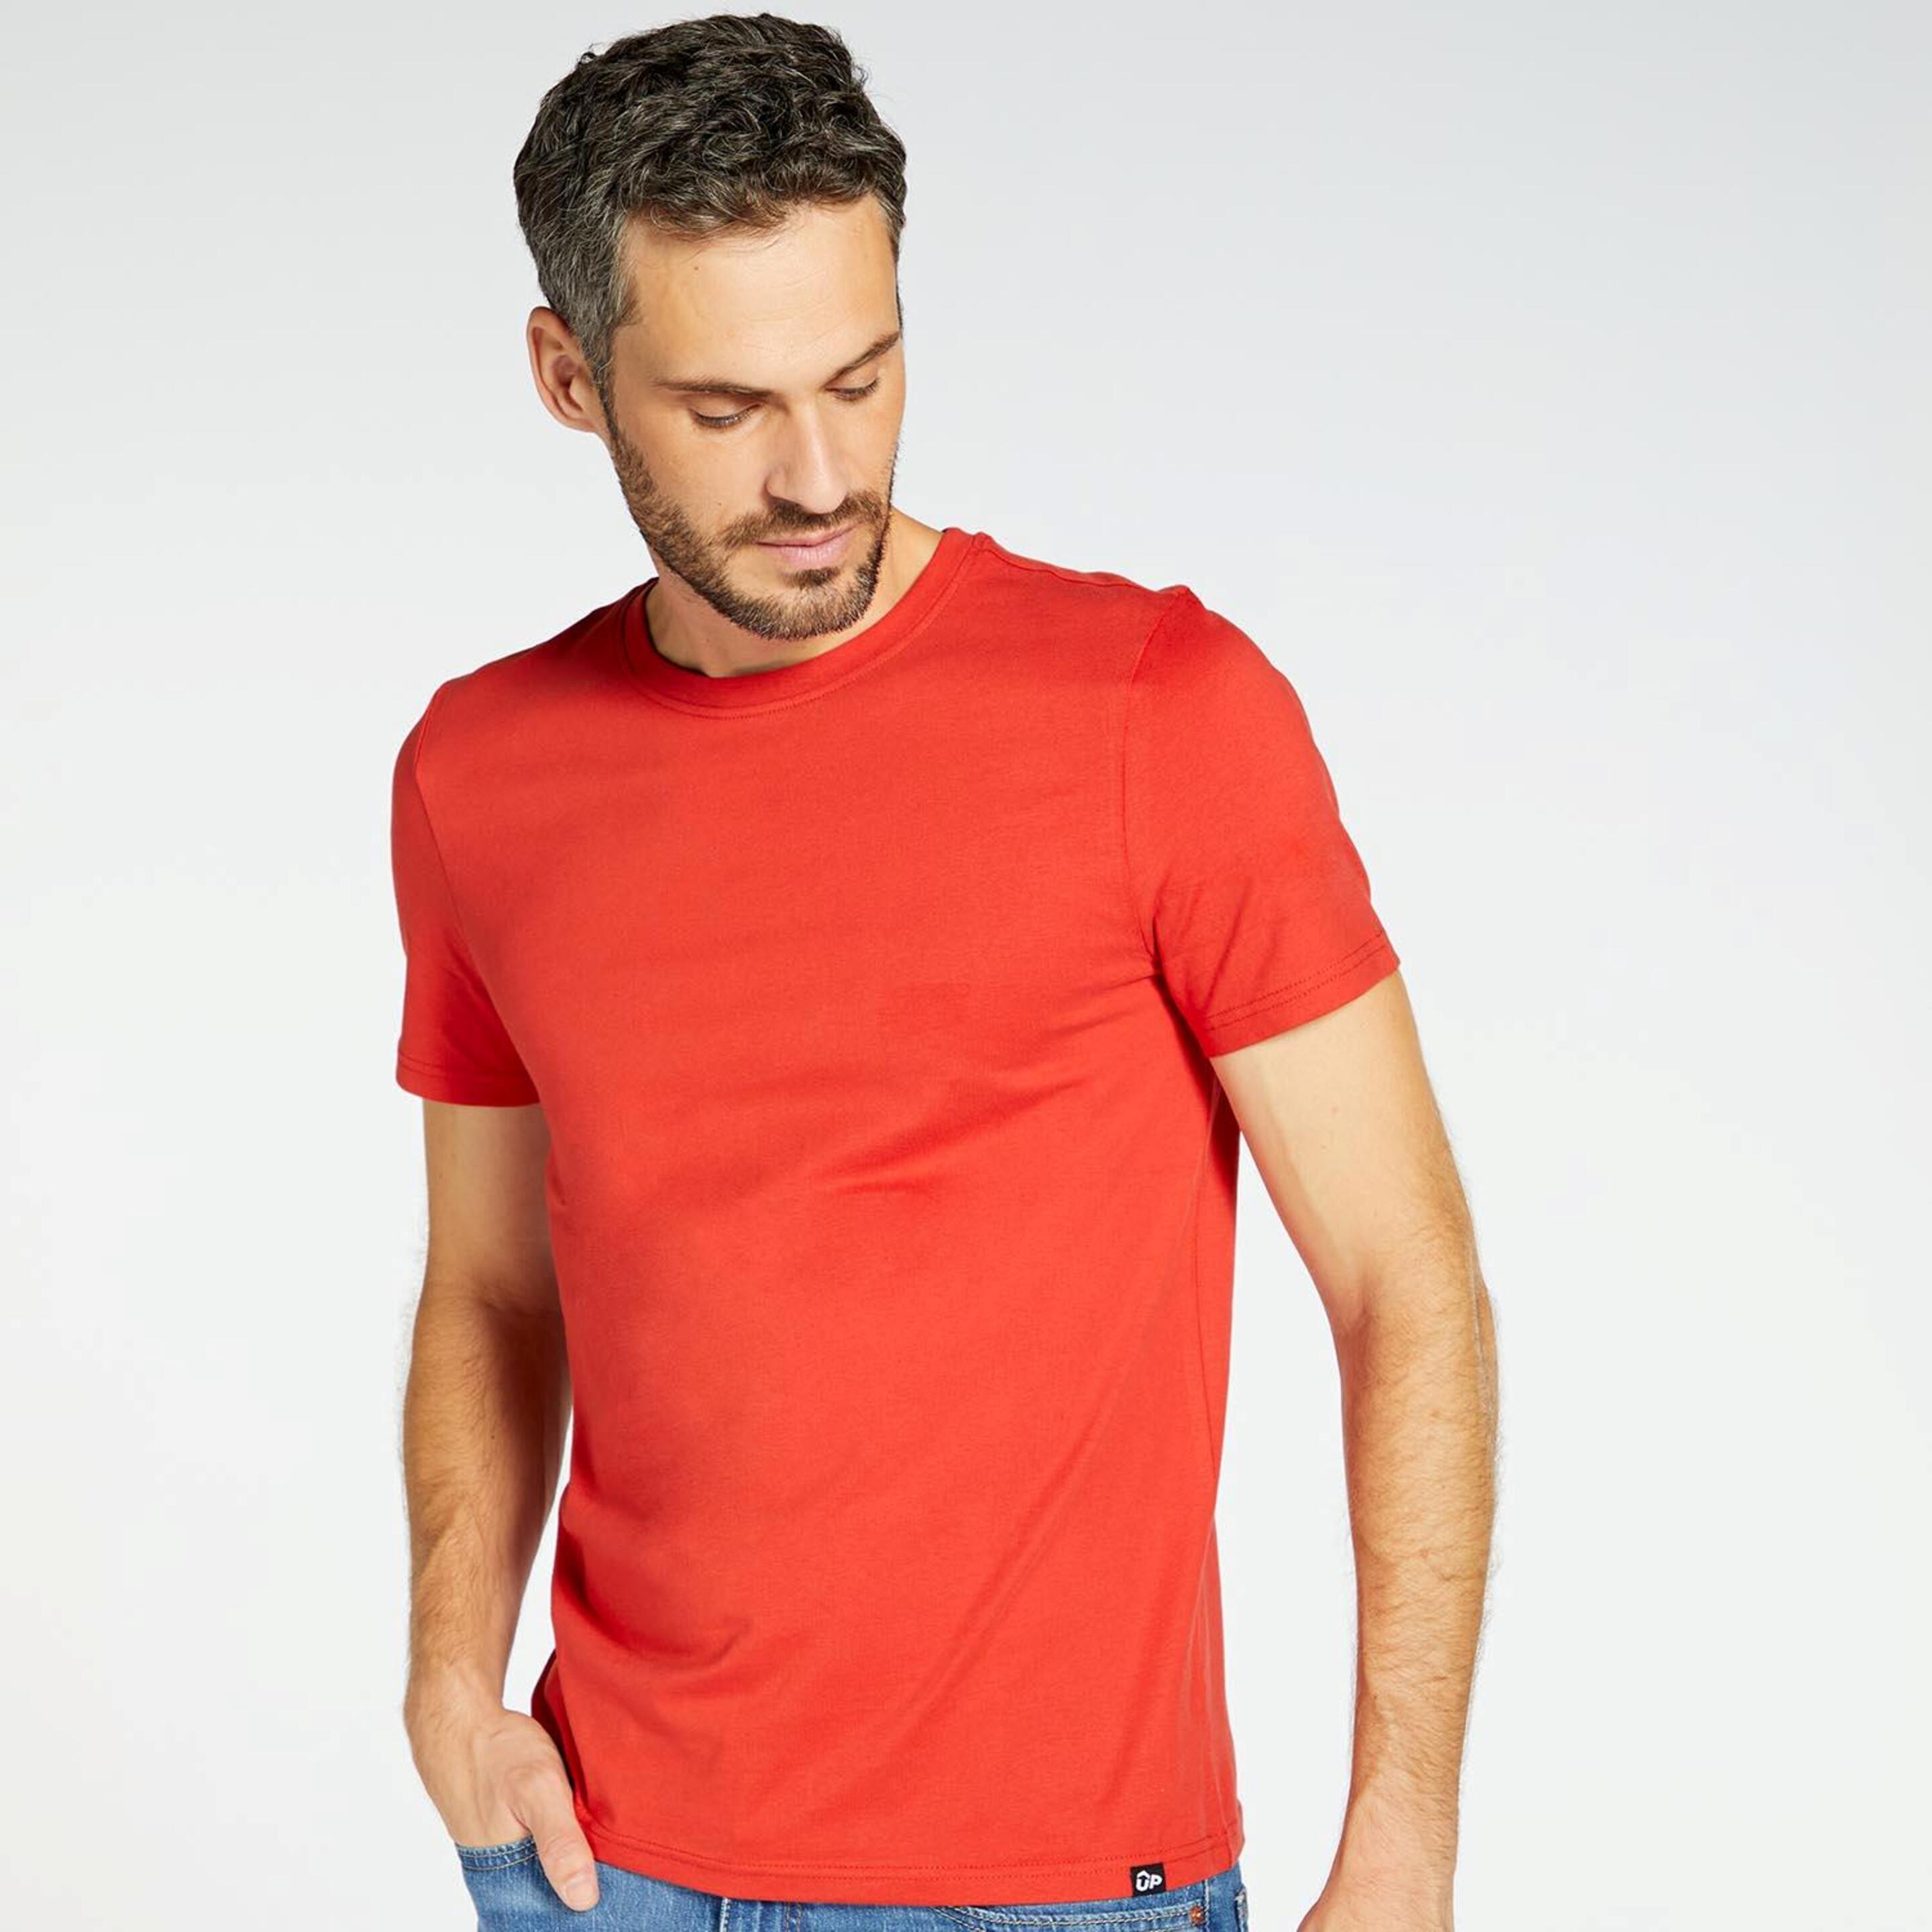 Up Basic - rojo - Camiseta Hombre